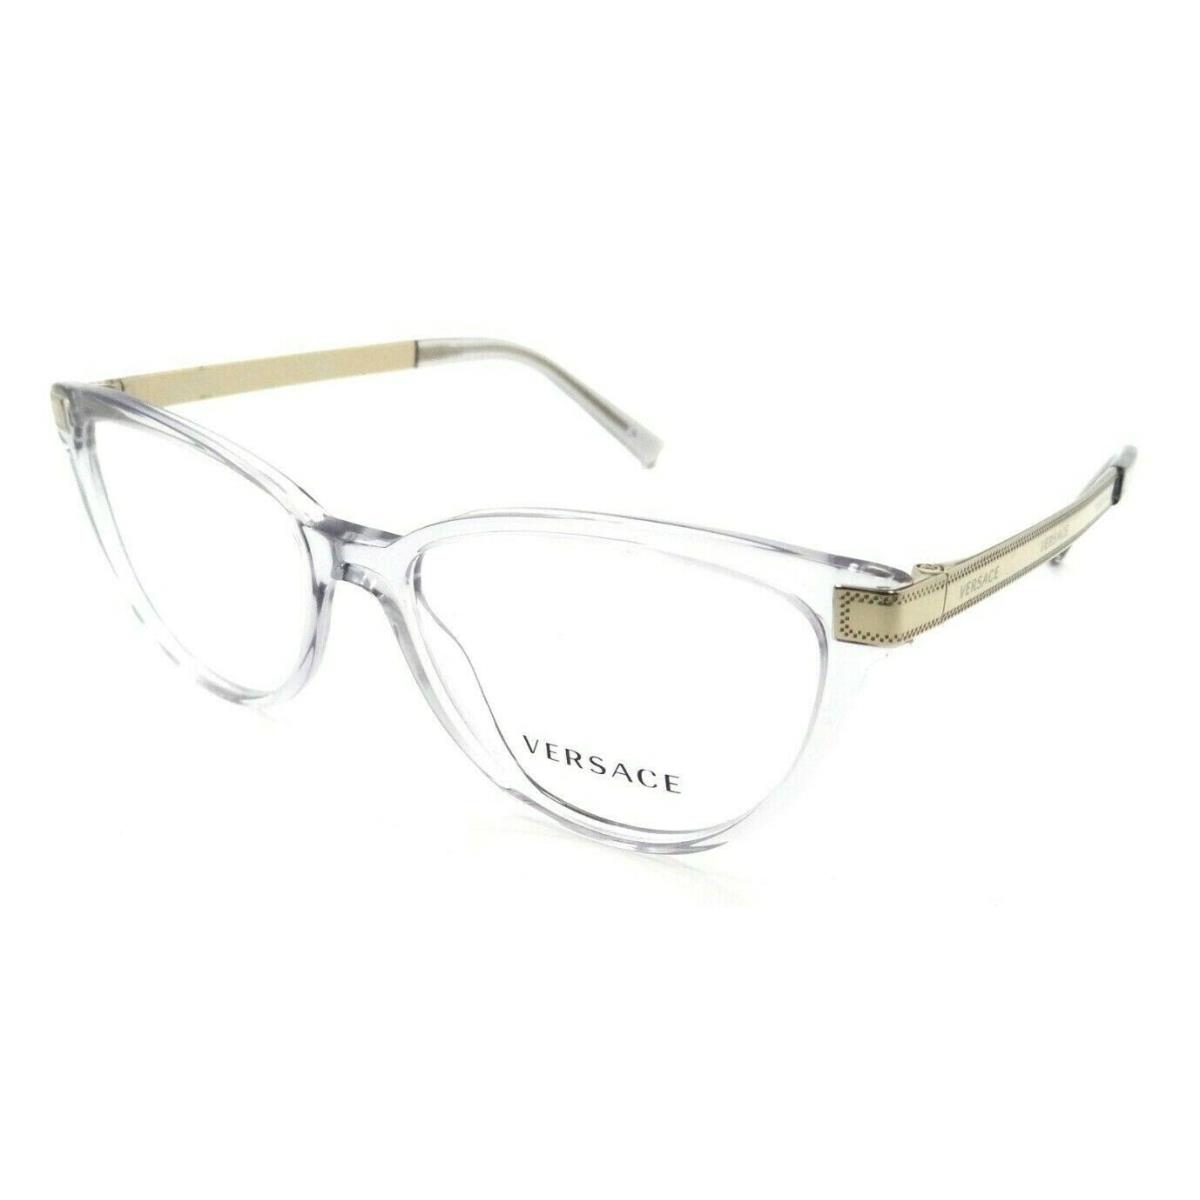 Versace Eyeglasses Frames VE 3271 5305 54-16-140 Transparent Grey Made in Italy